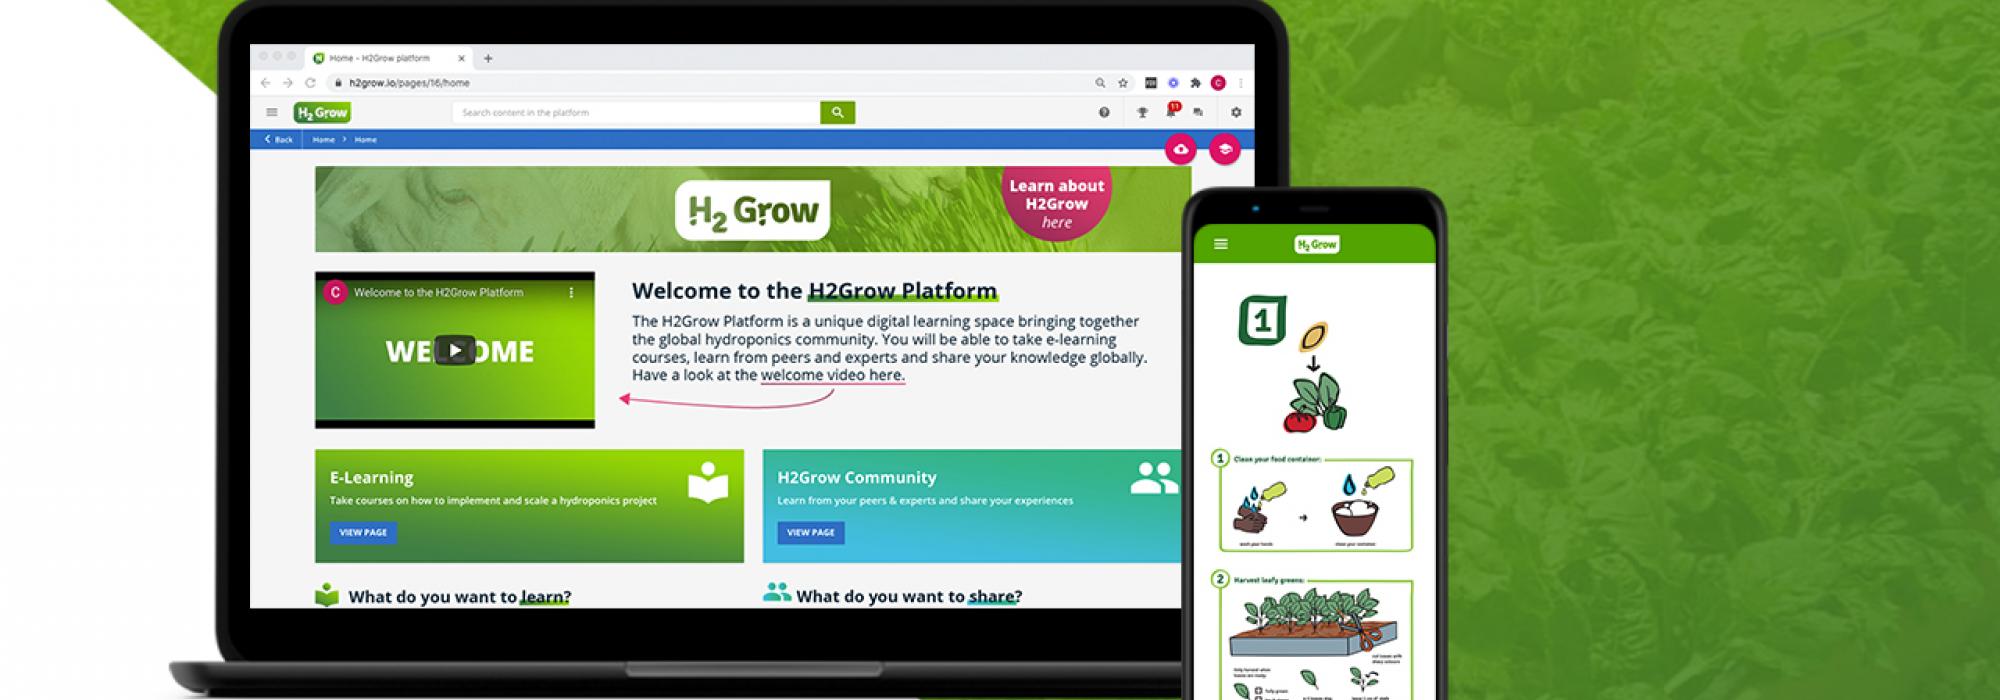 H2Grow Learning Platform